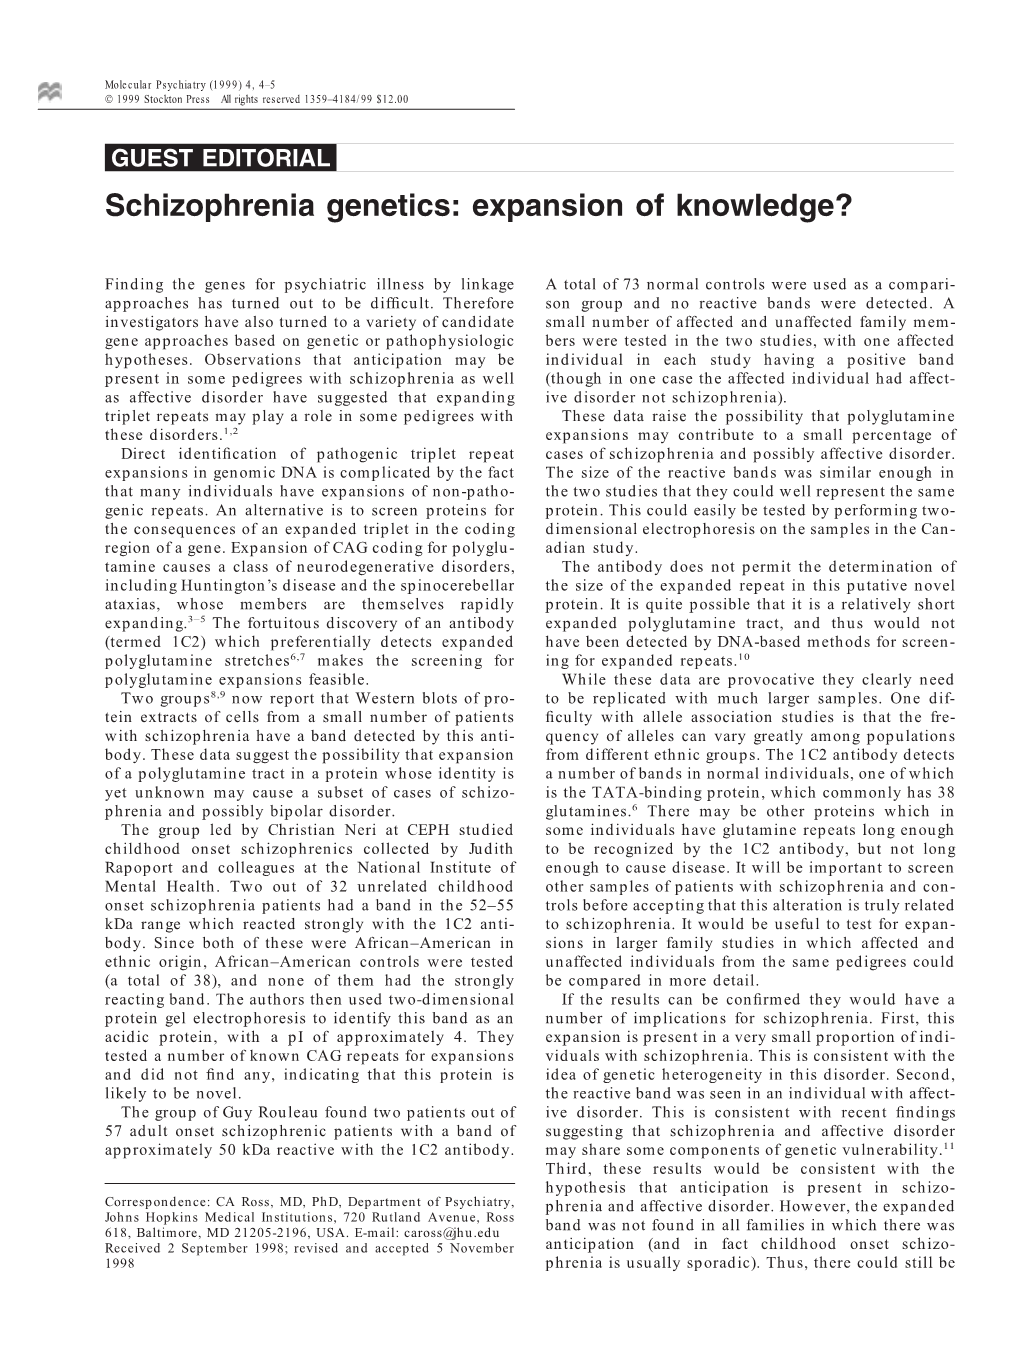 Schizophrenia Genetics: Expansion of Knowledge?